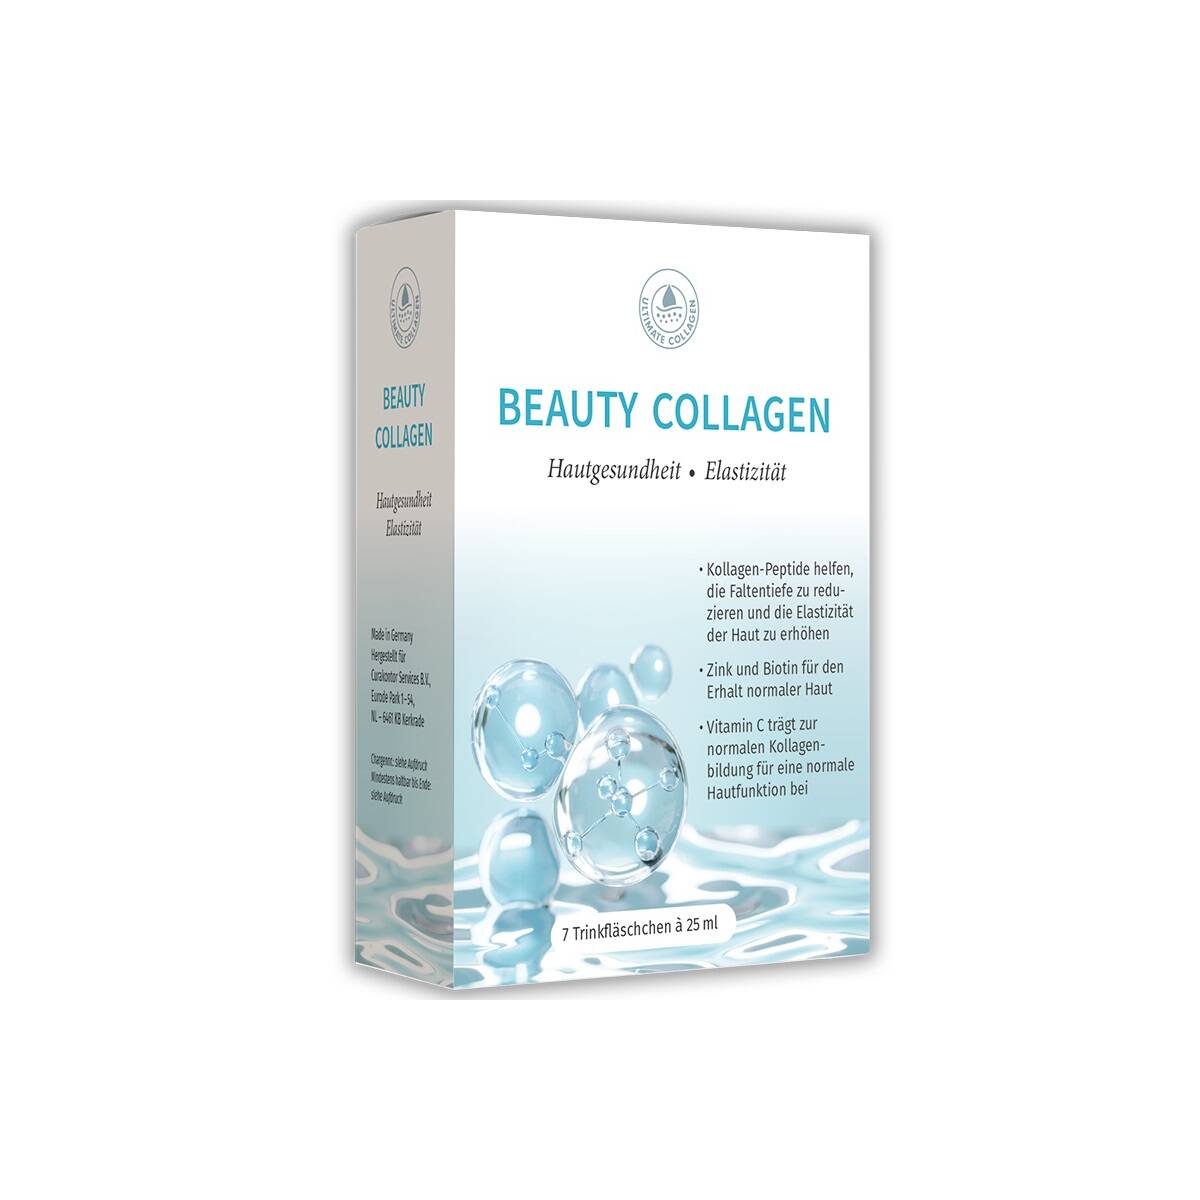   Beauty Collagen  